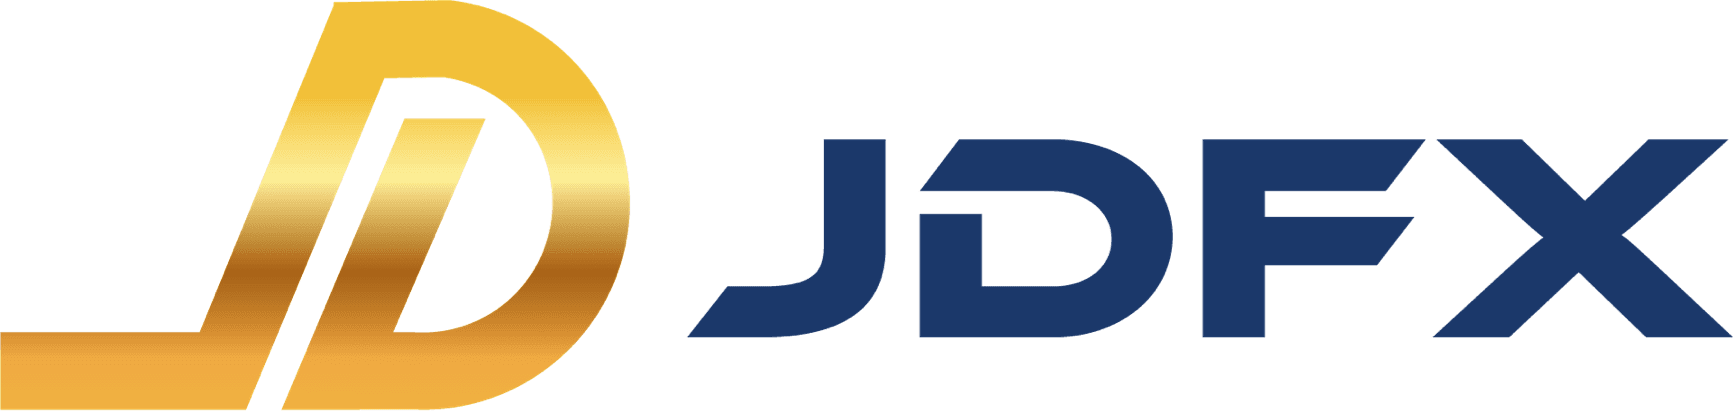 JDFX